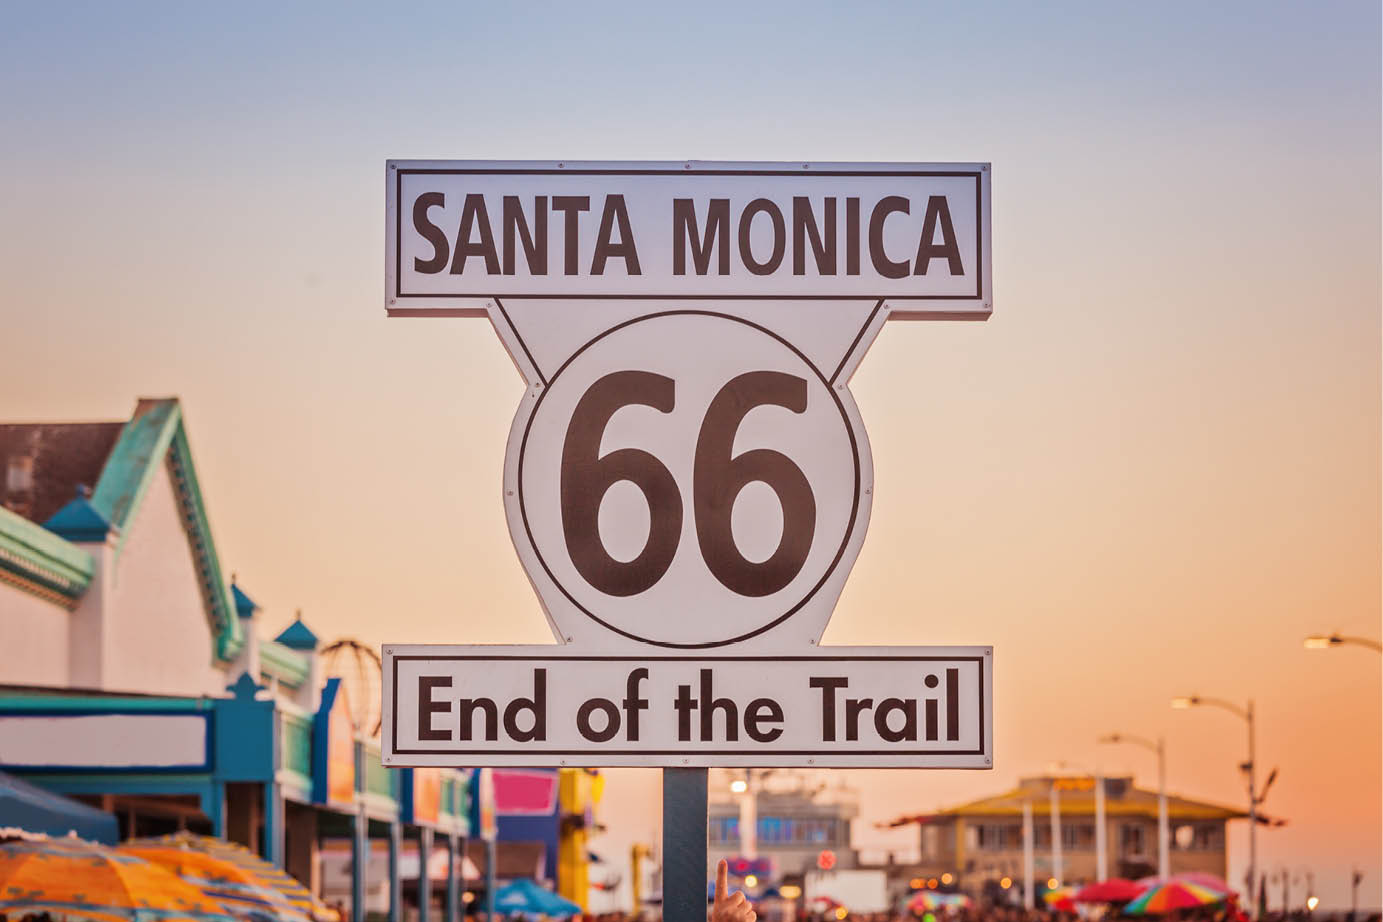 Historic Route 66 sign on pierce of Santa Monica California